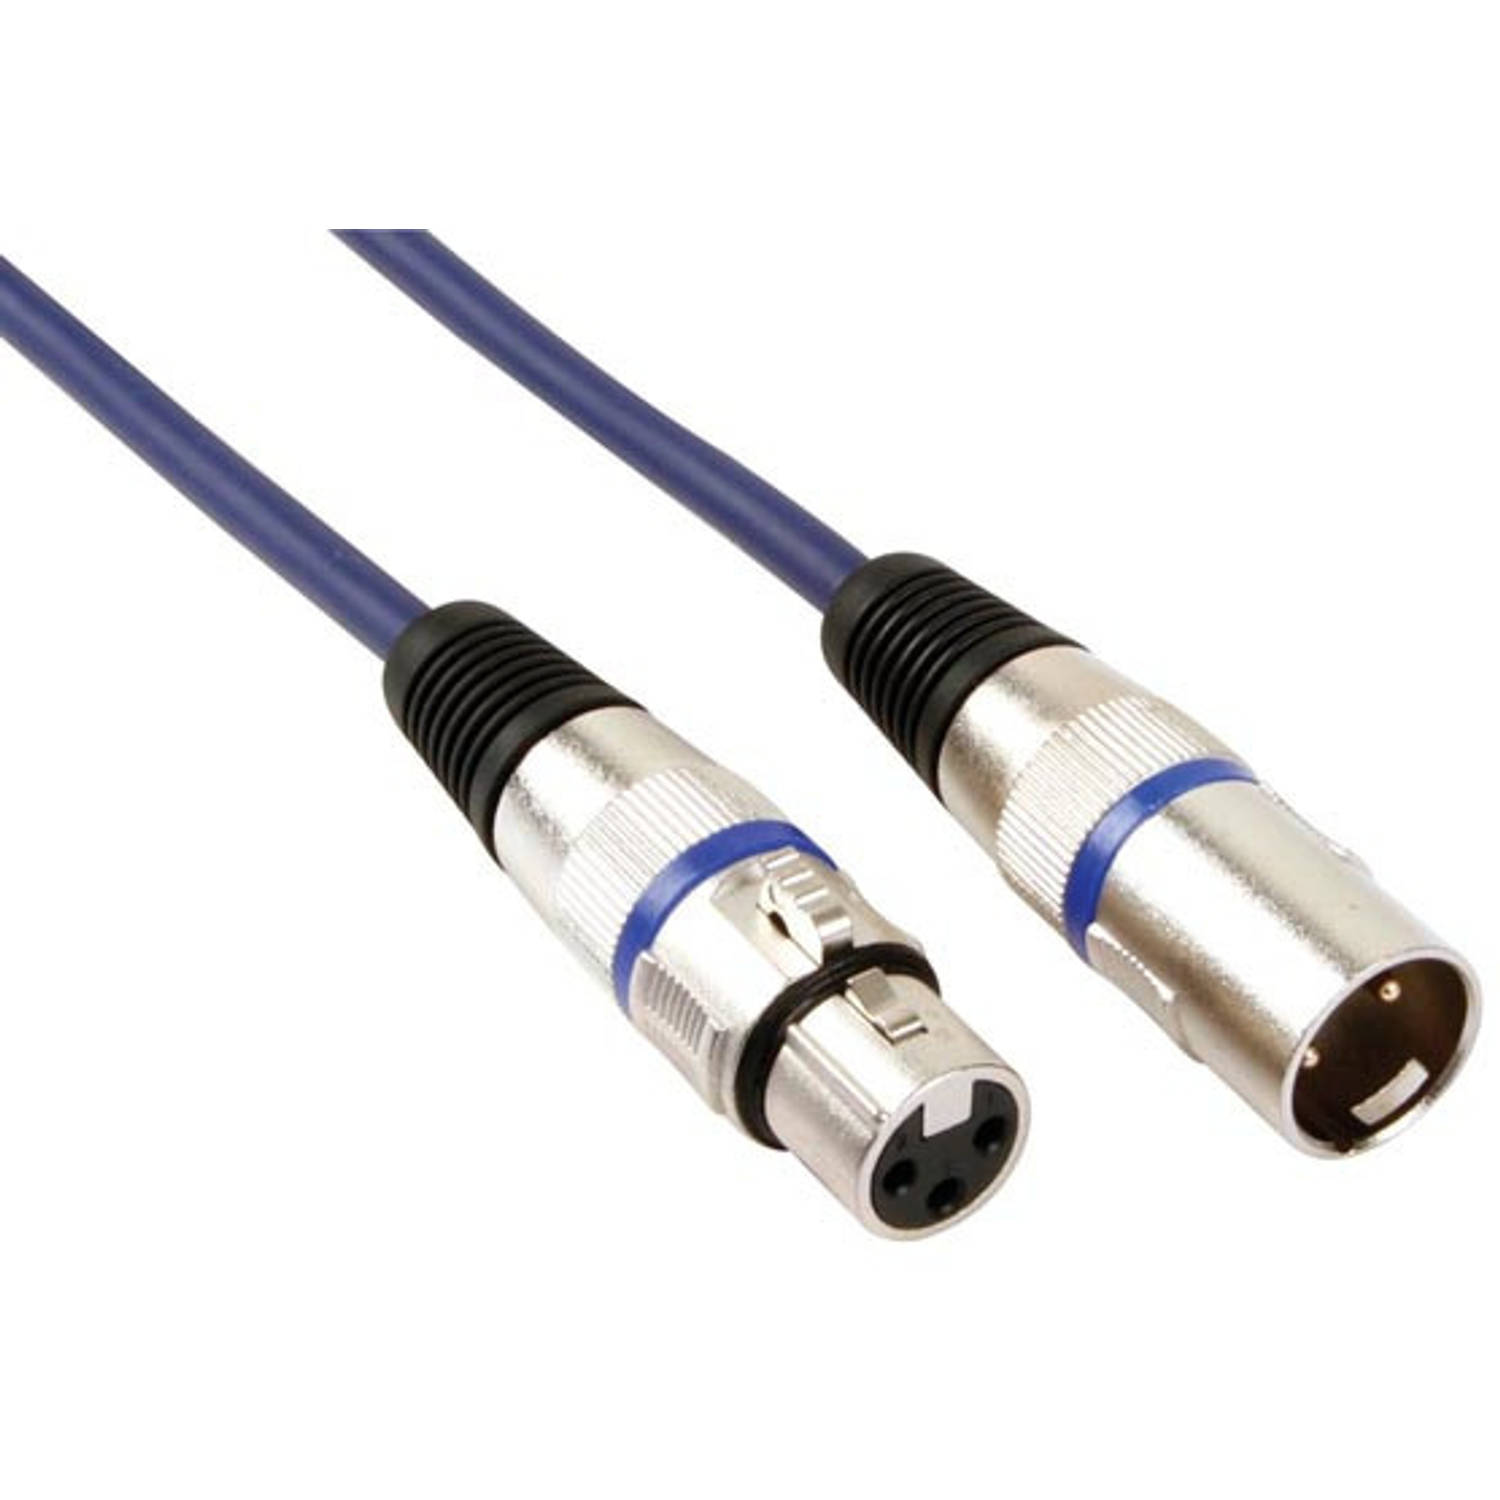 HQ-Power audiokabel DMX XLR 3-pin 5 meter rubber blauw